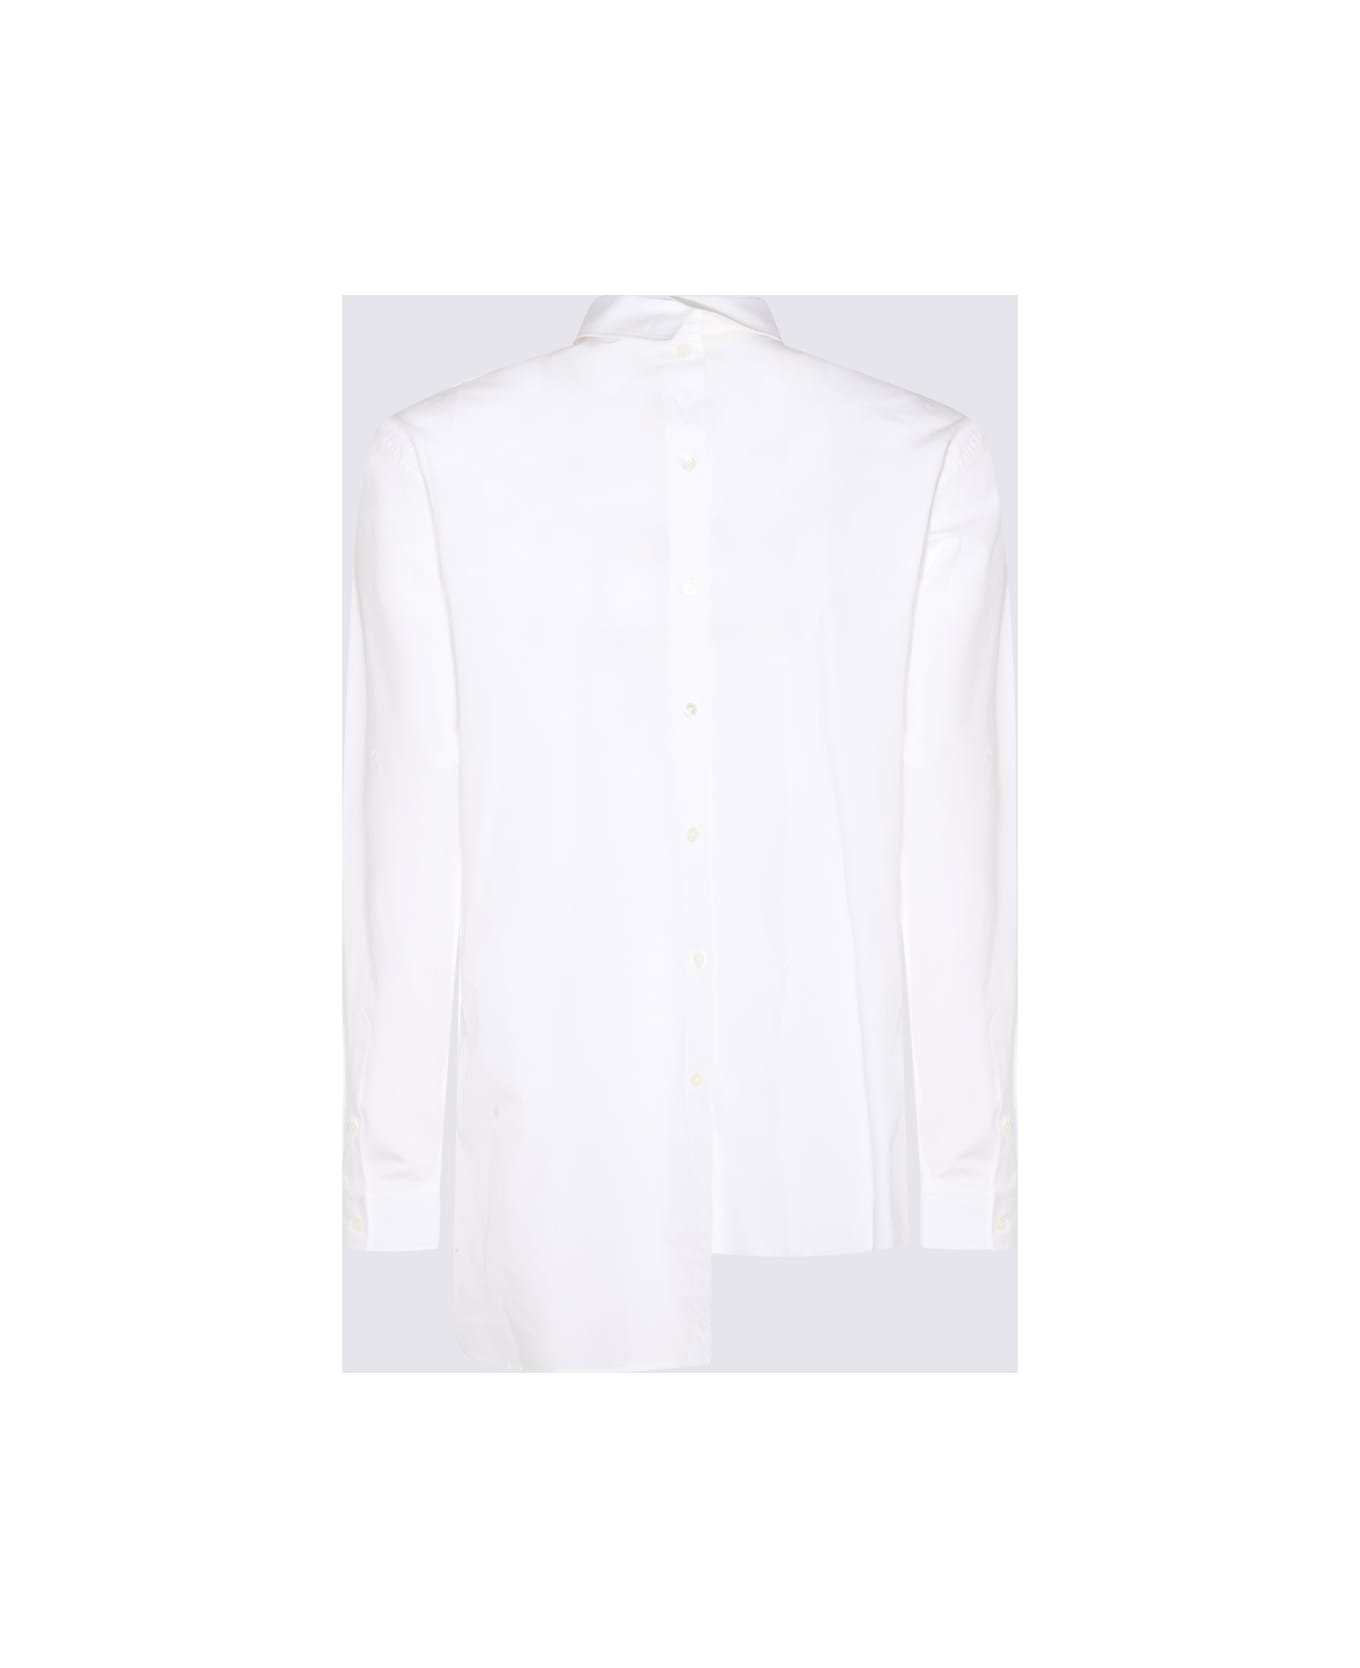 Lanvin White Cotton Shirt - White